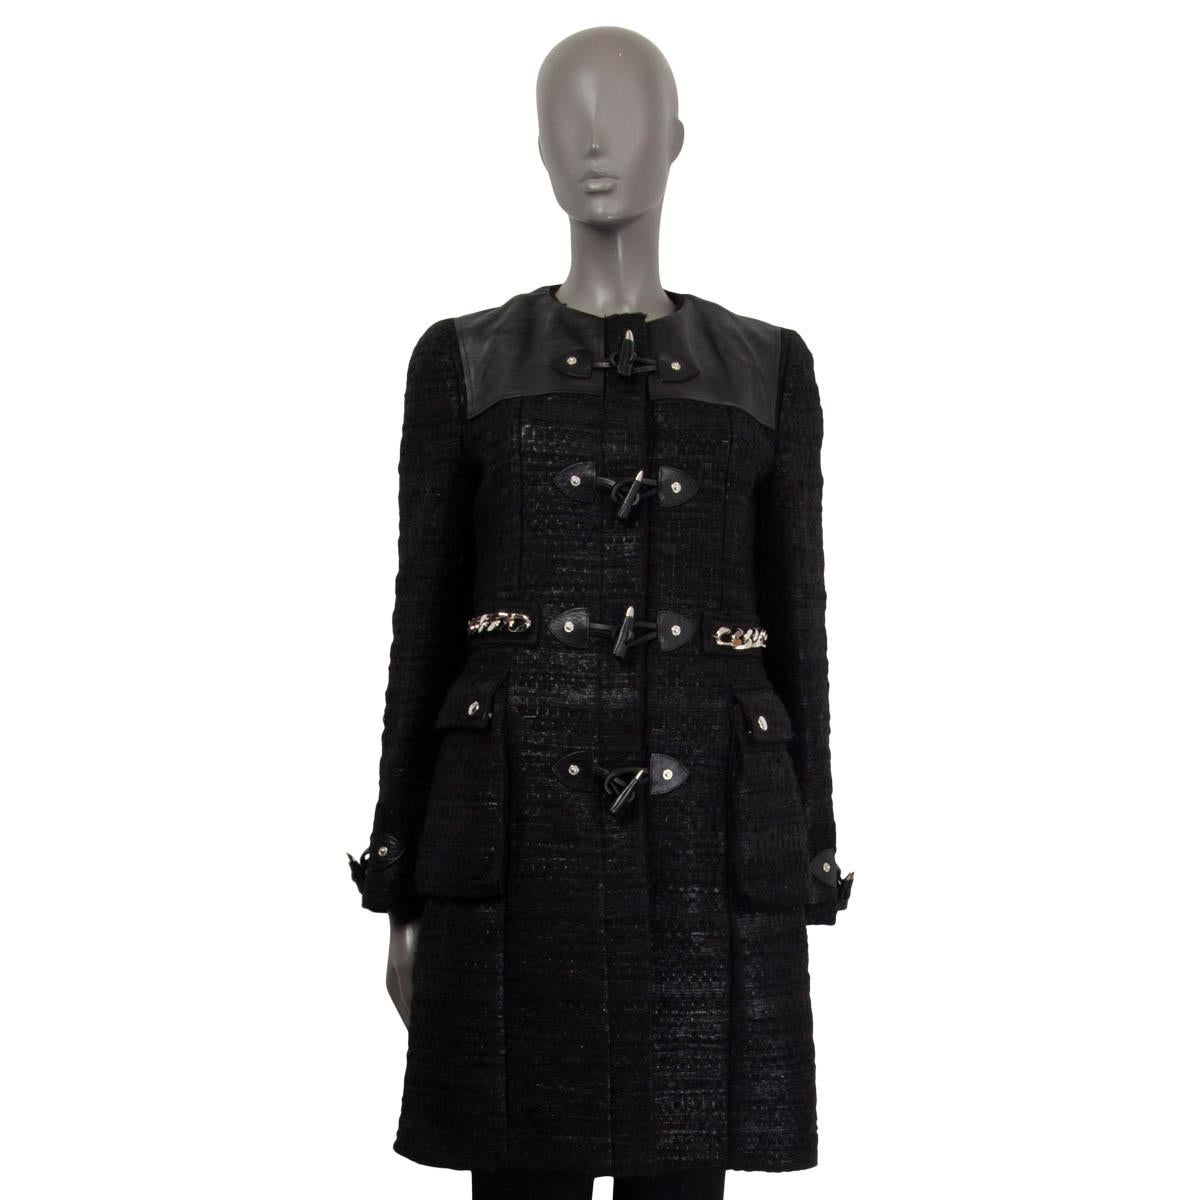 GIVENCHY schwarzer Wollmantel TWEED CHAIN EMBELLISHED DUFFLE Coat Jacke 38 S (Schwarz) im Angebot